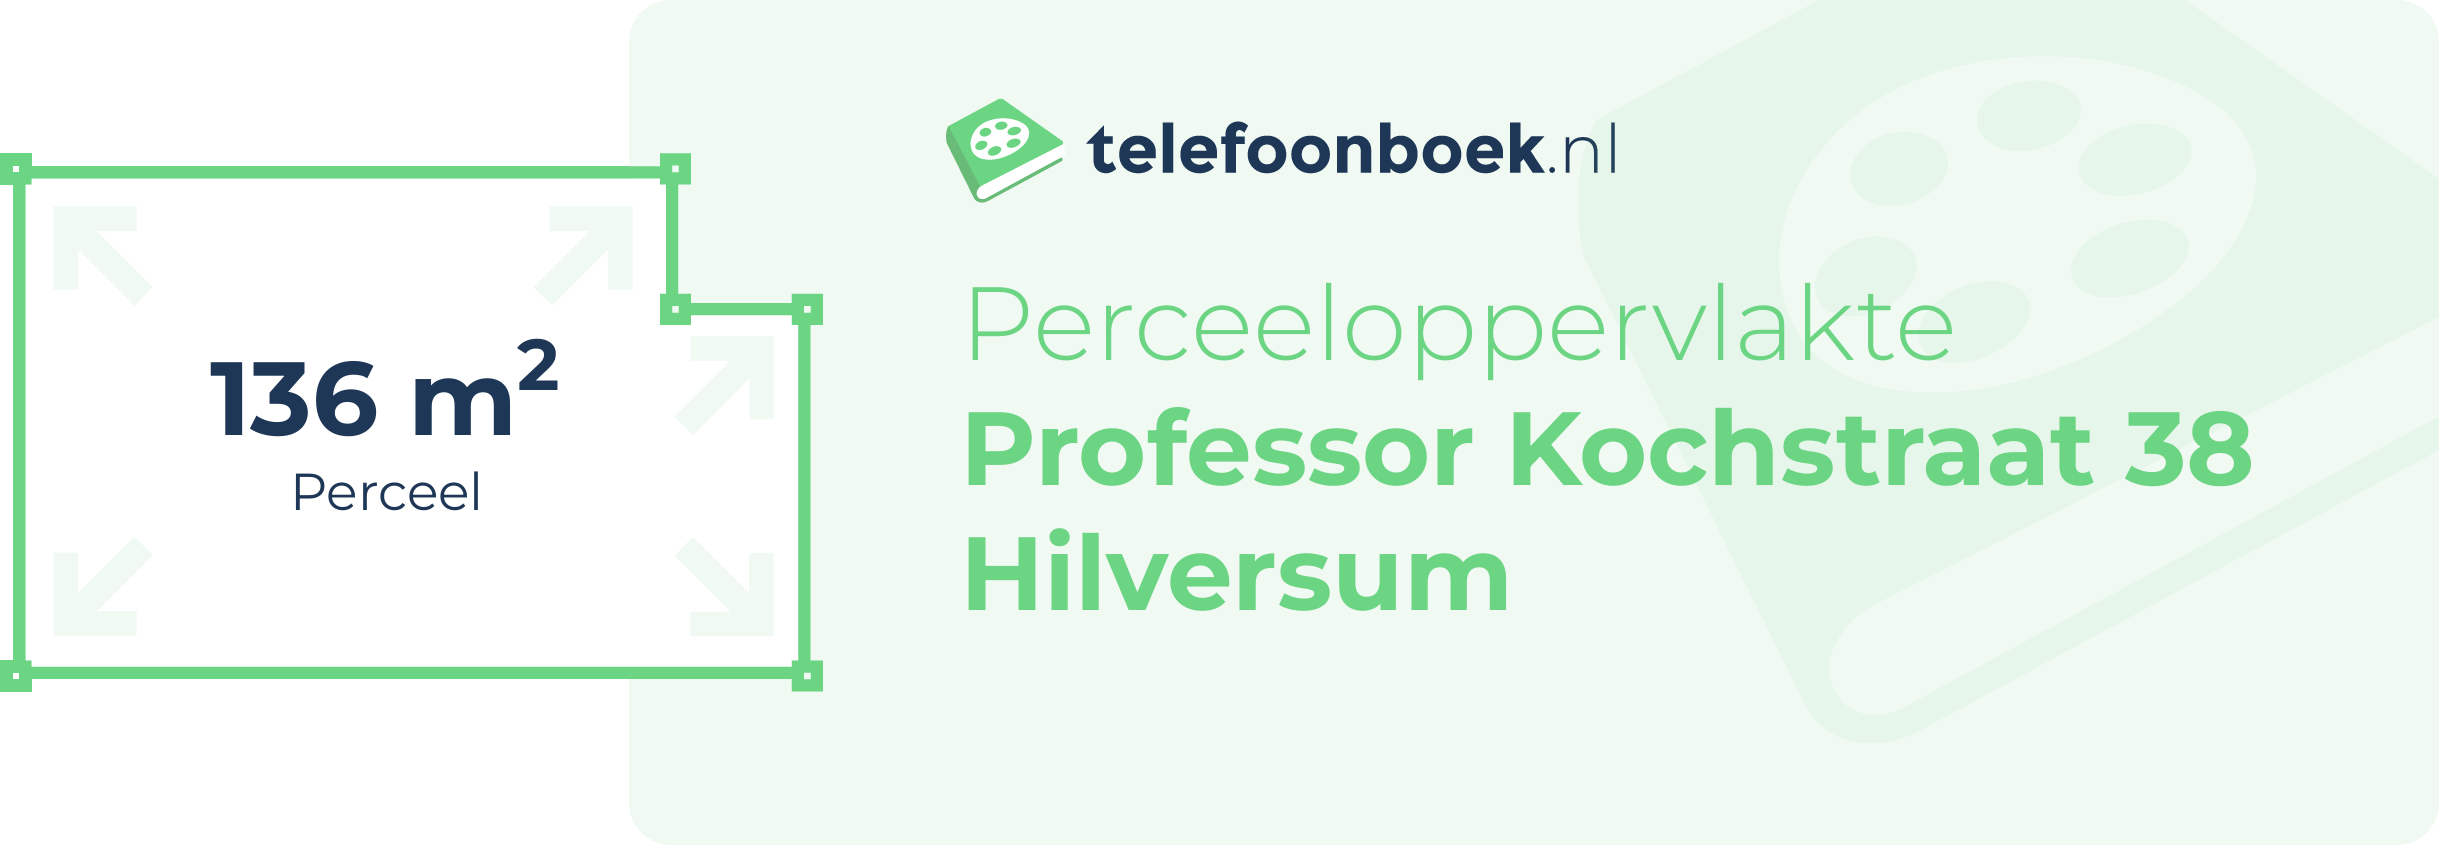 Perceeloppervlakte Professor Kochstraat 38 Hilversum